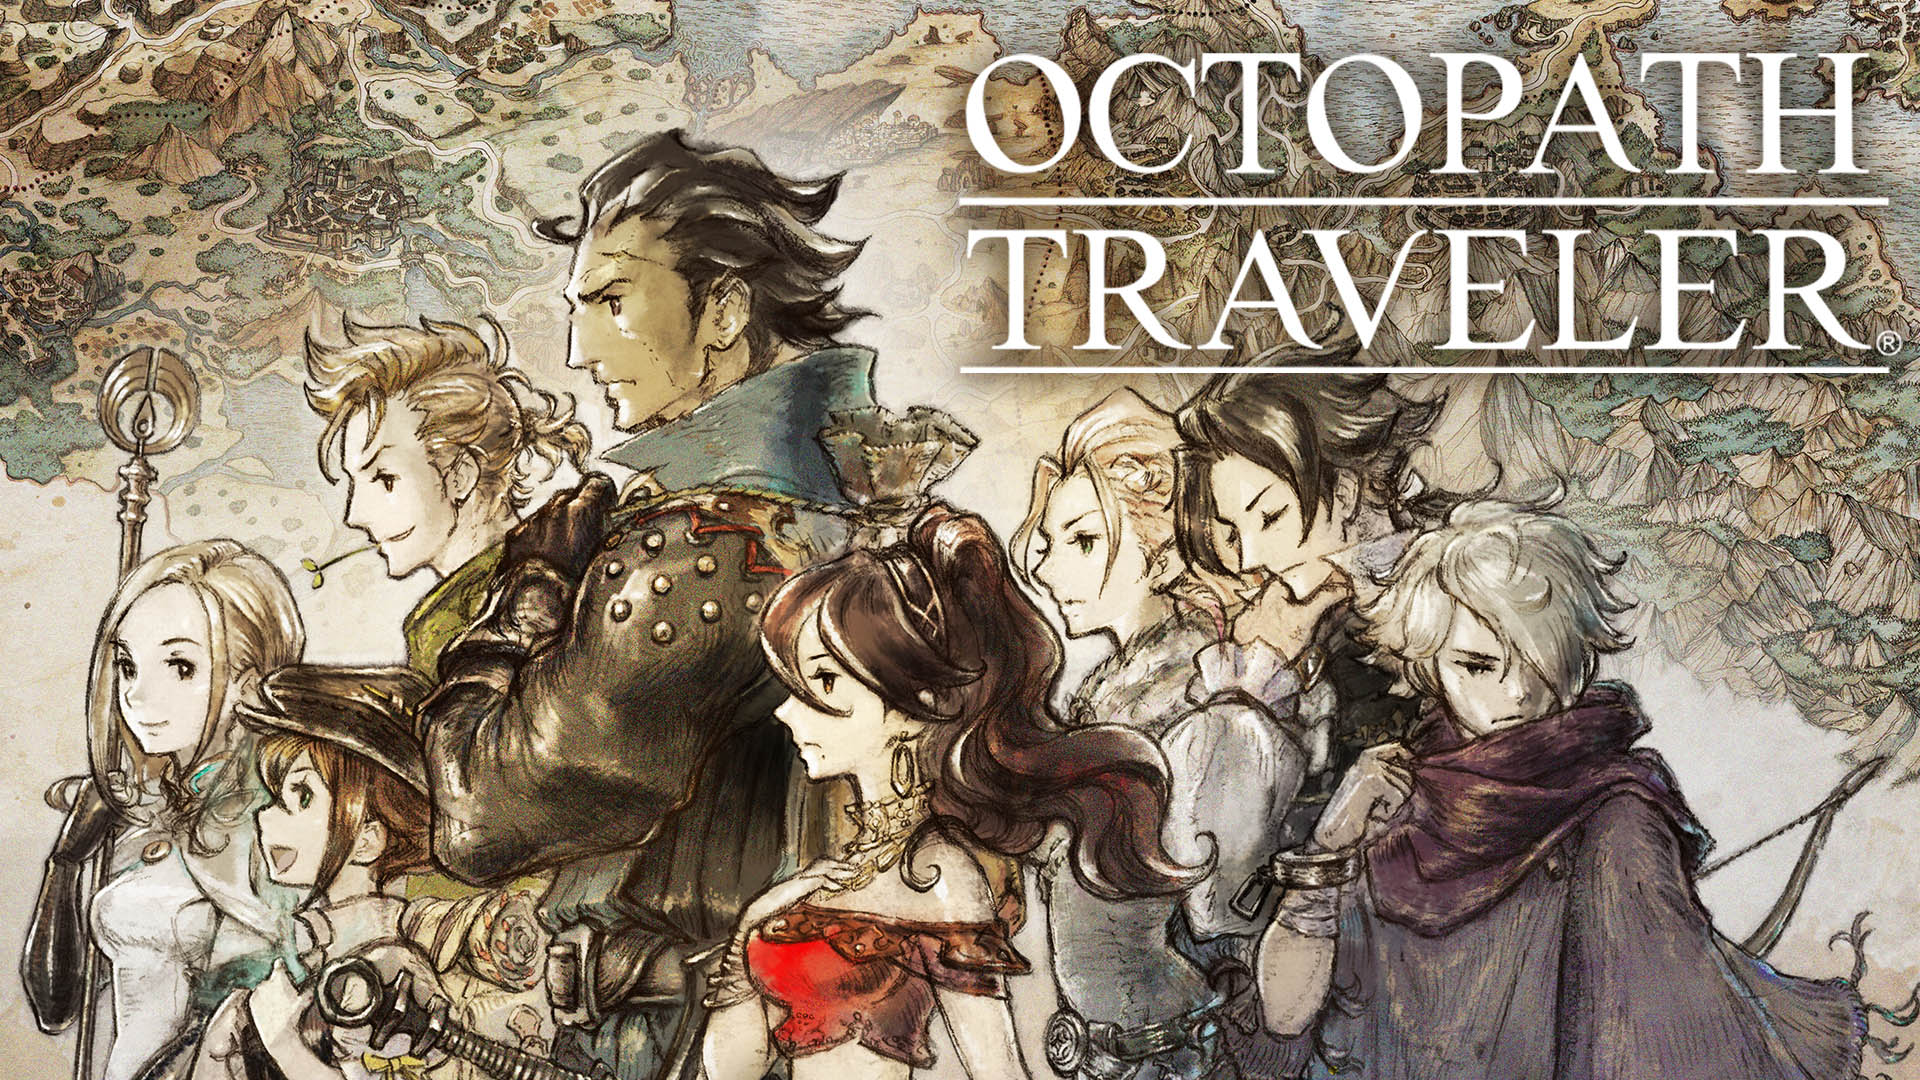 Player's favorite games: Octopath Traveler